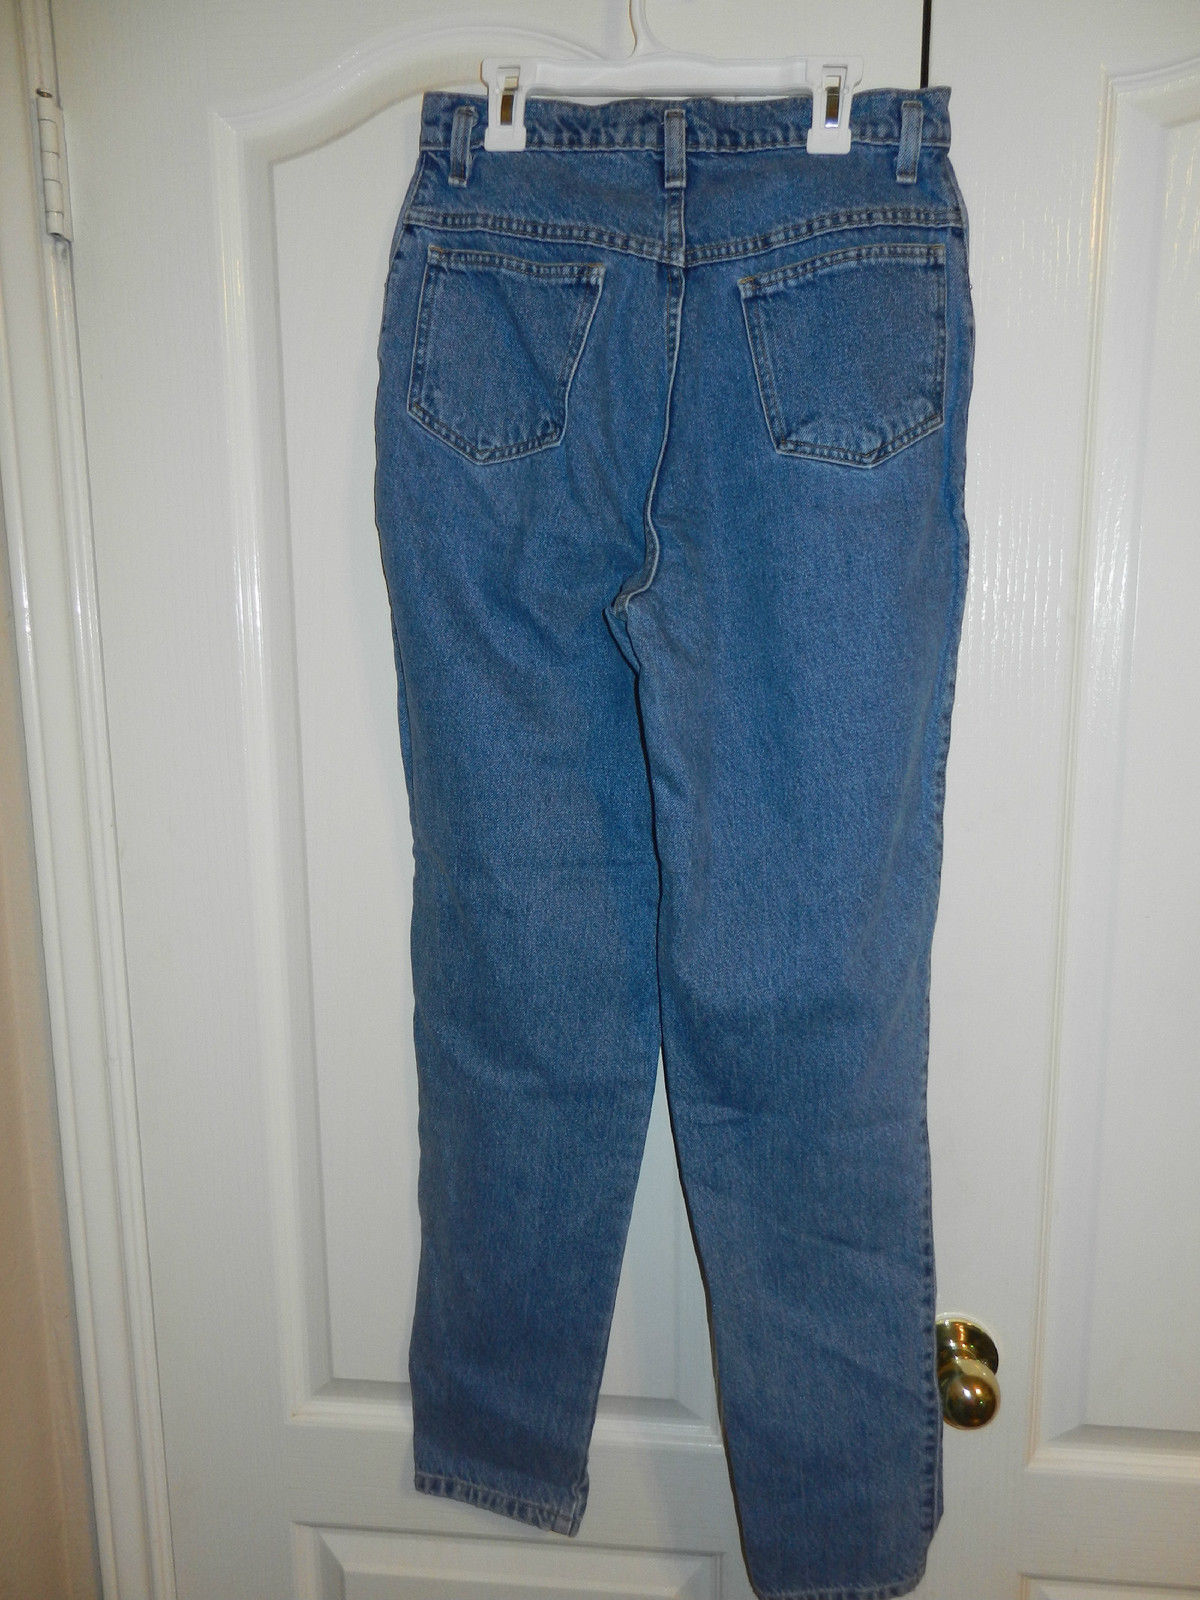 Sasson Jeans Vintage 1980s High Waist Jeans Misses Size 10 Waist 29 ...